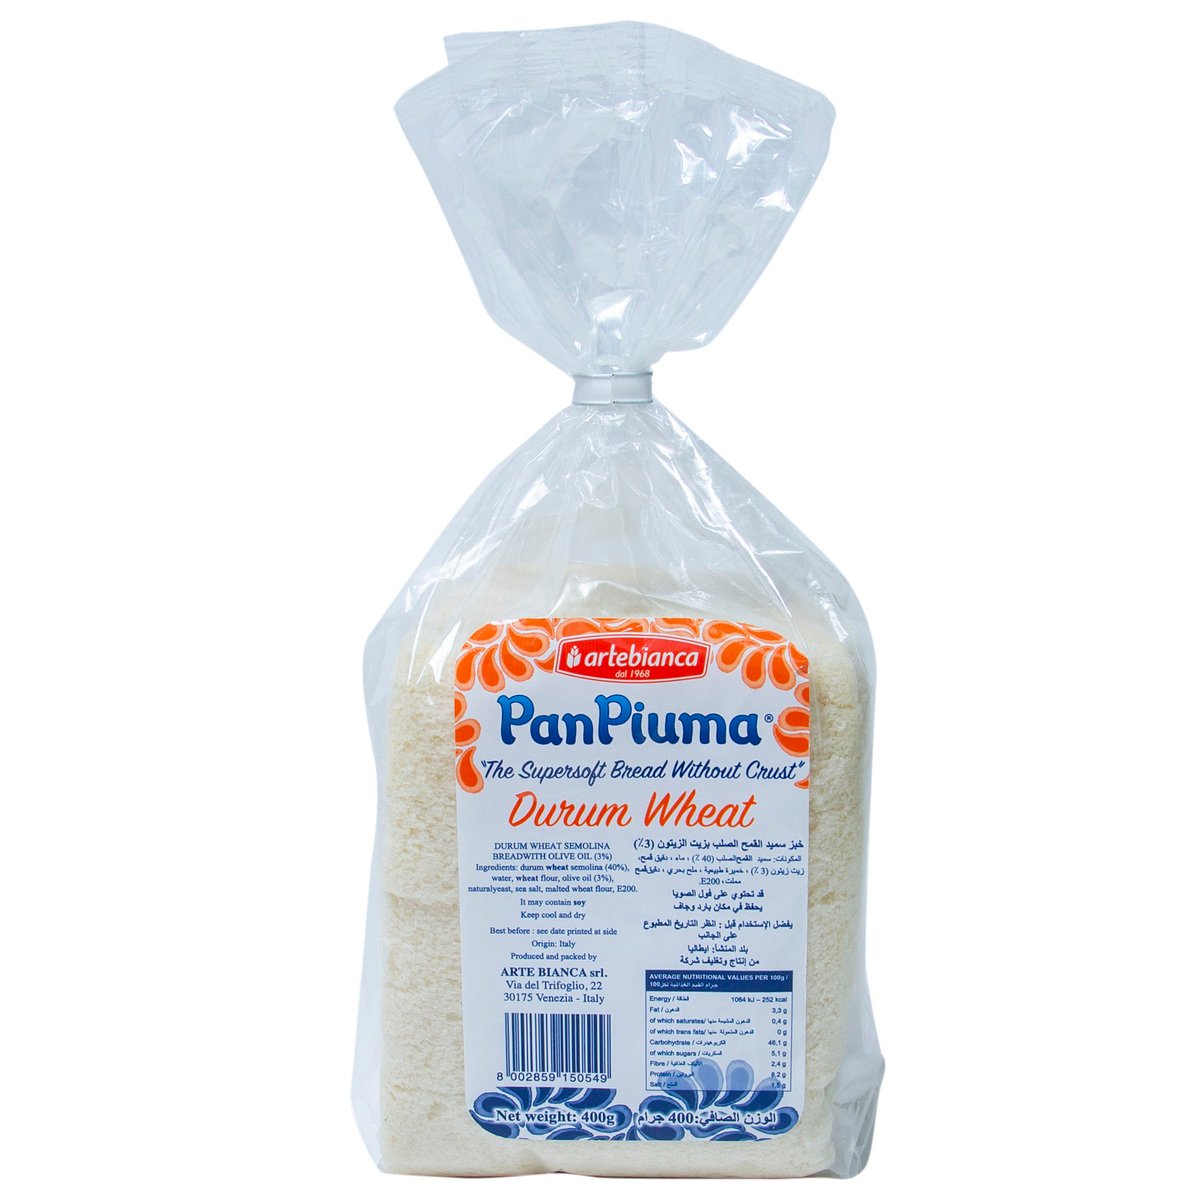 Pan Piuma The Super Soft Bread Without Crust Durum Wheat 1 pkt